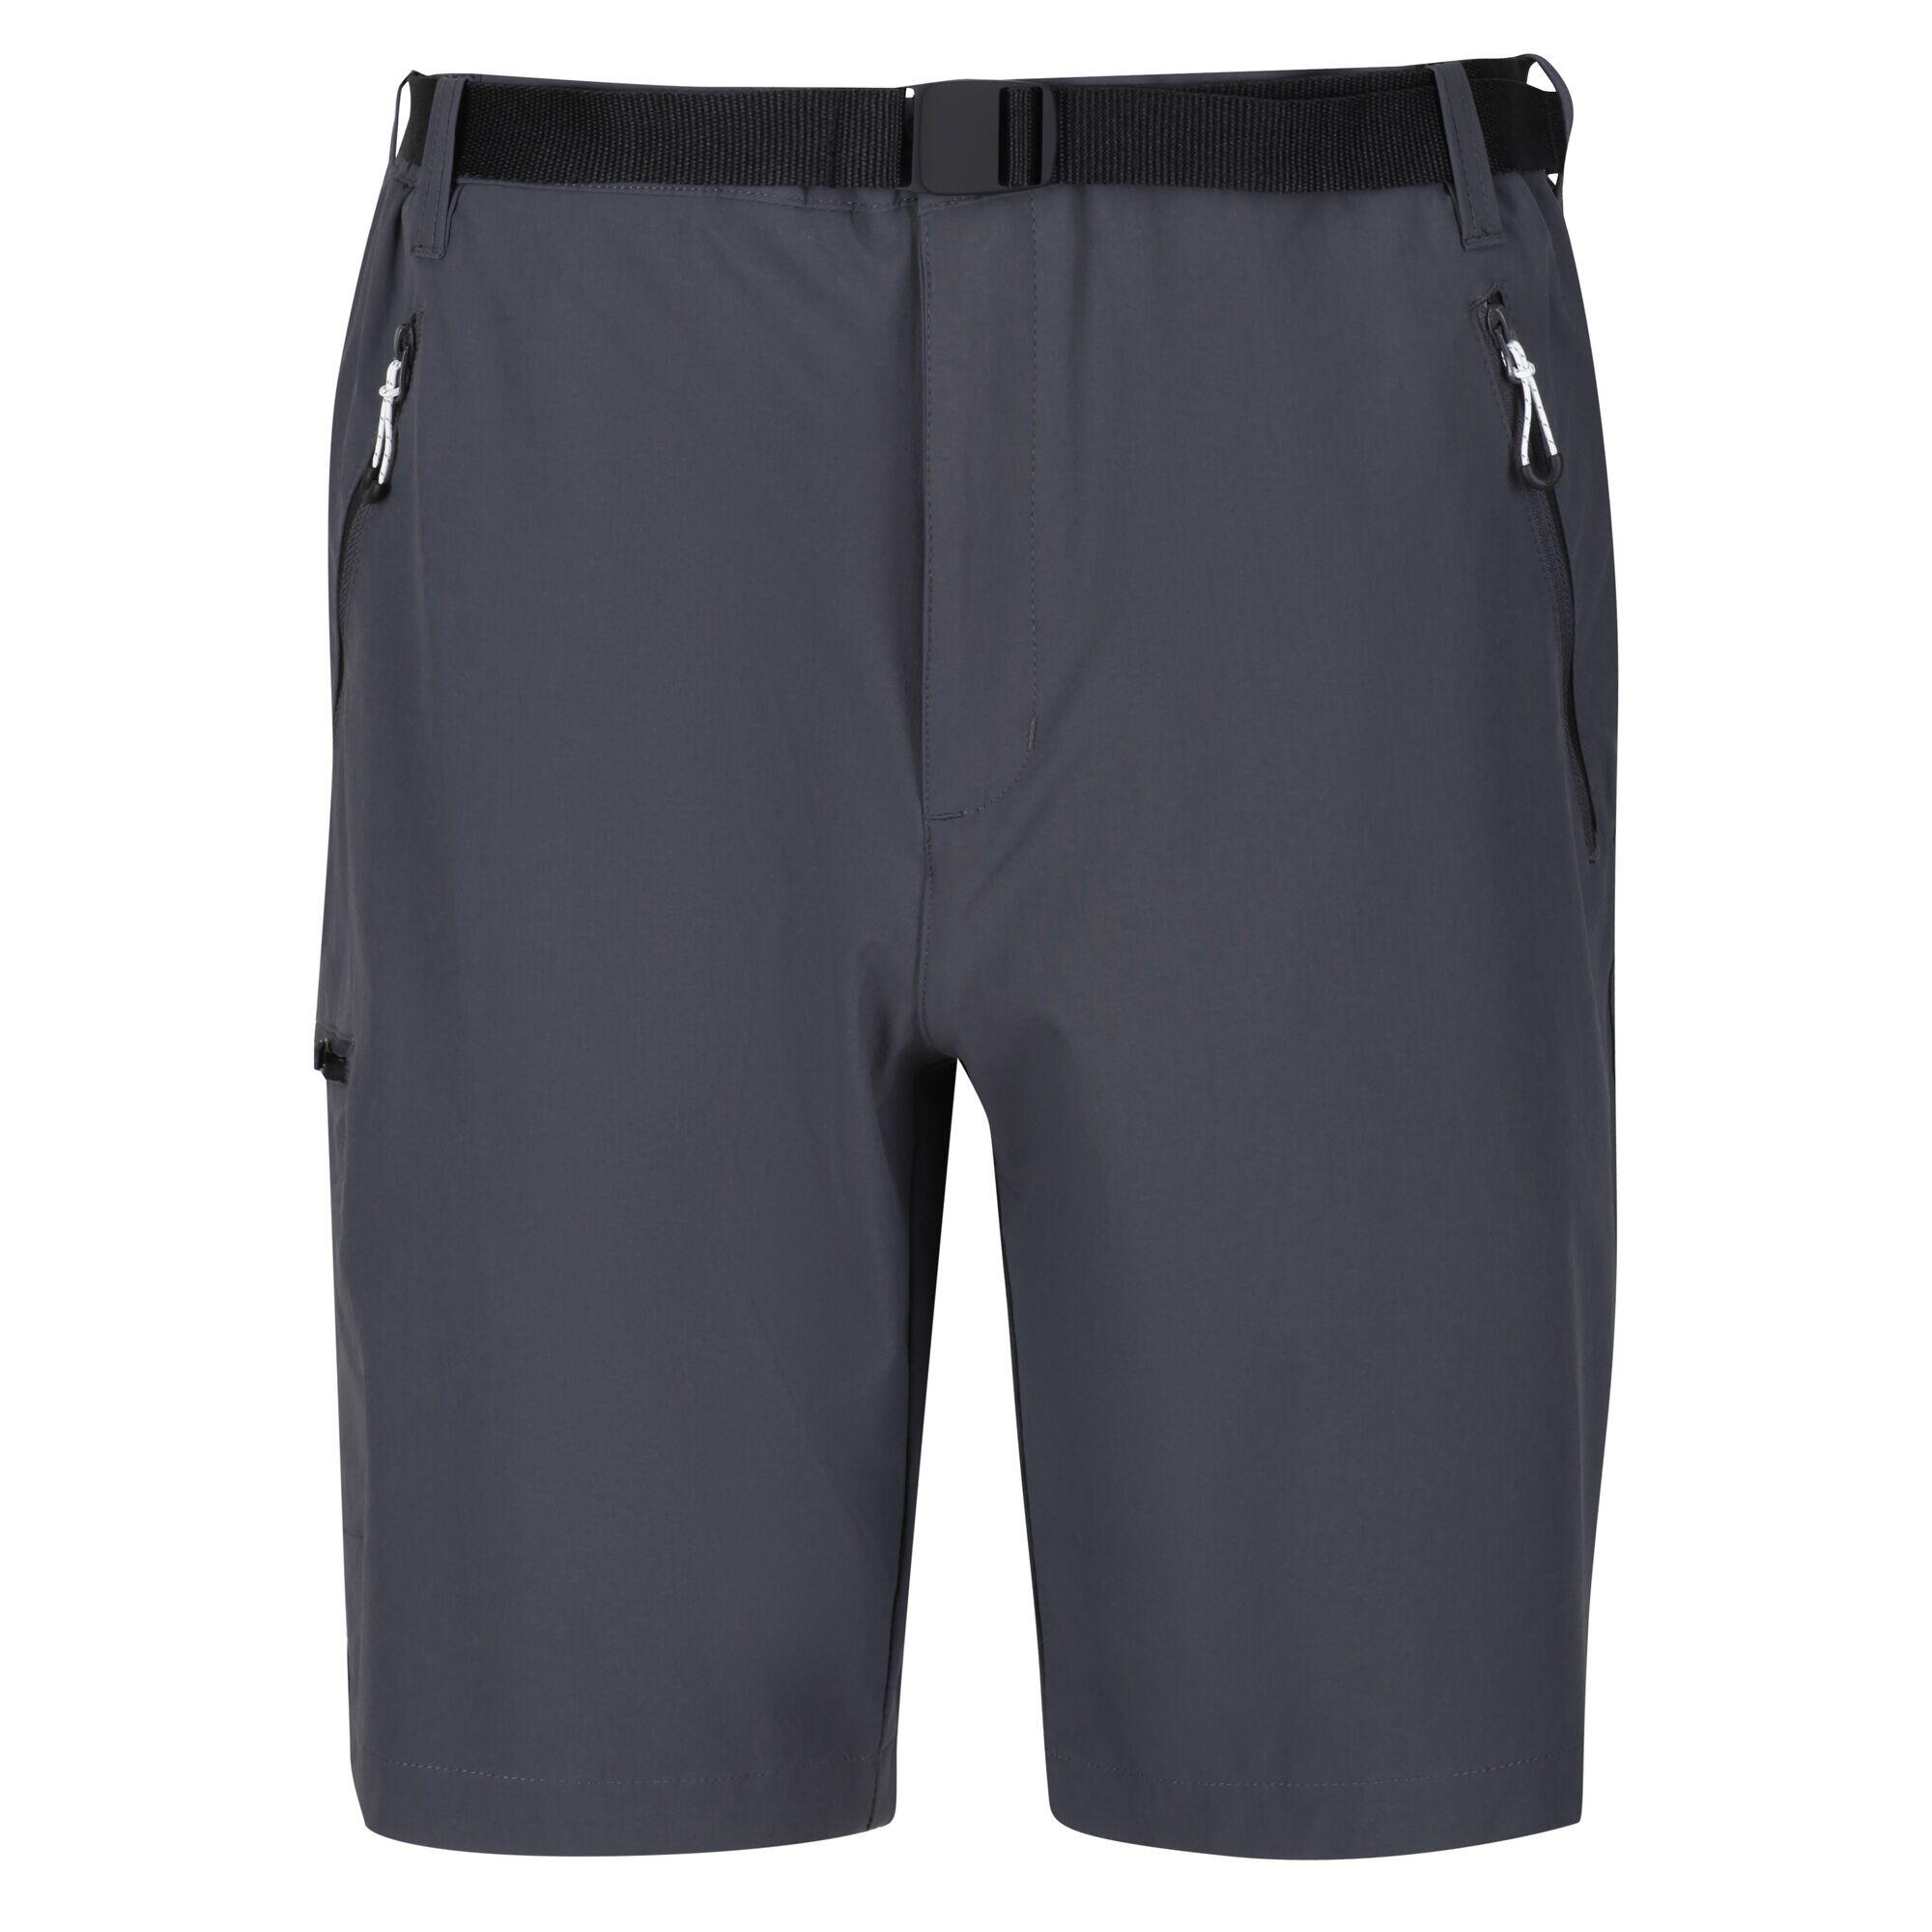 Xert III Men's Hiking Shorts - Mid Grey 5/7